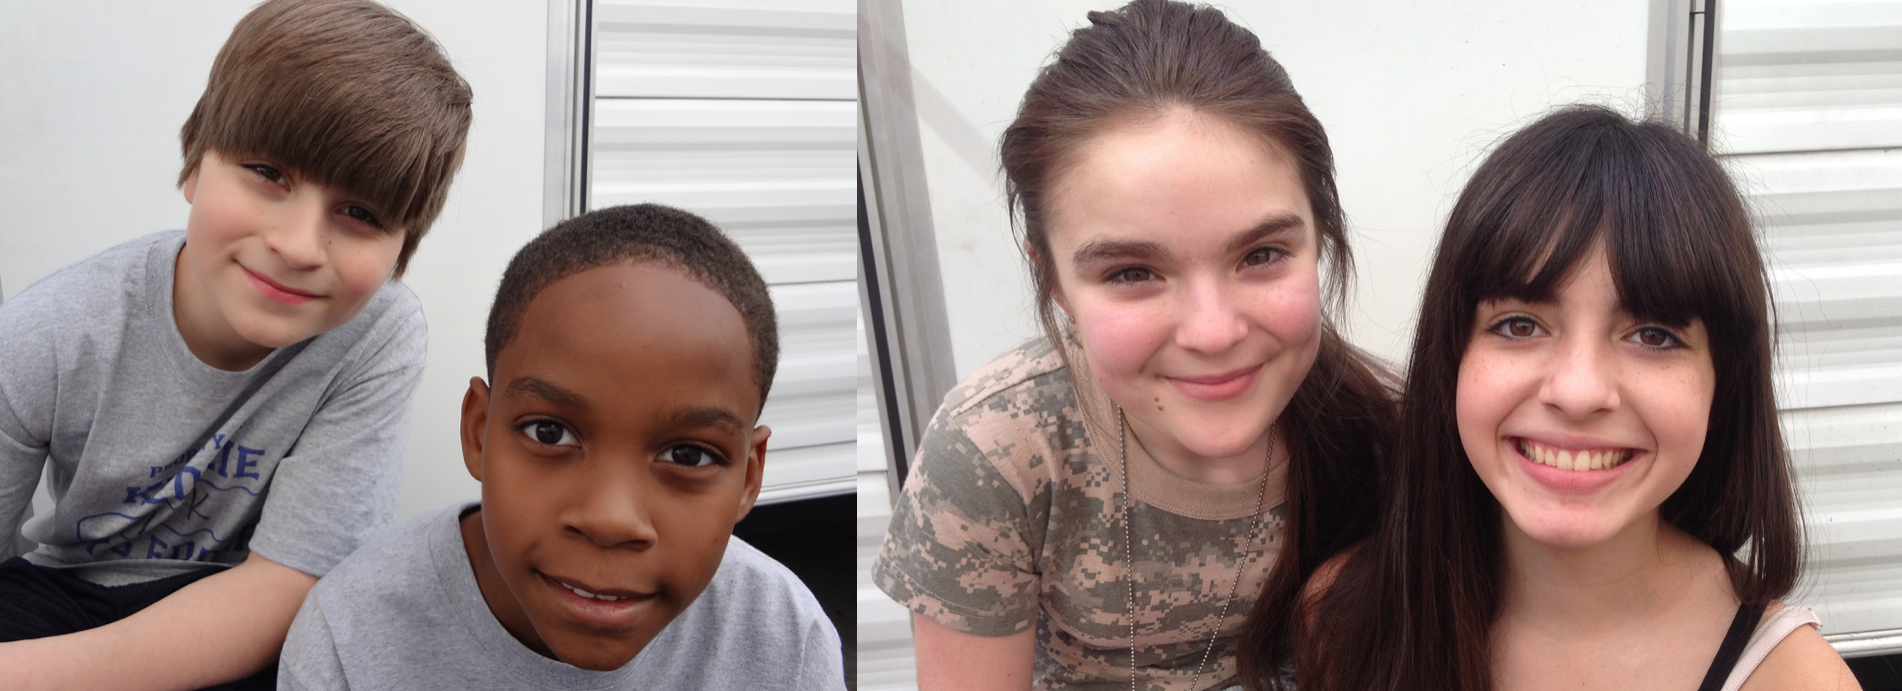 NEW GIRL Cast: Stone Eisenmann (Young Nick),Jordan Fuller (Young Winston), HannaH Eisenmann (Young Jess) & Jaidan Jiron (Young Ce Ce)